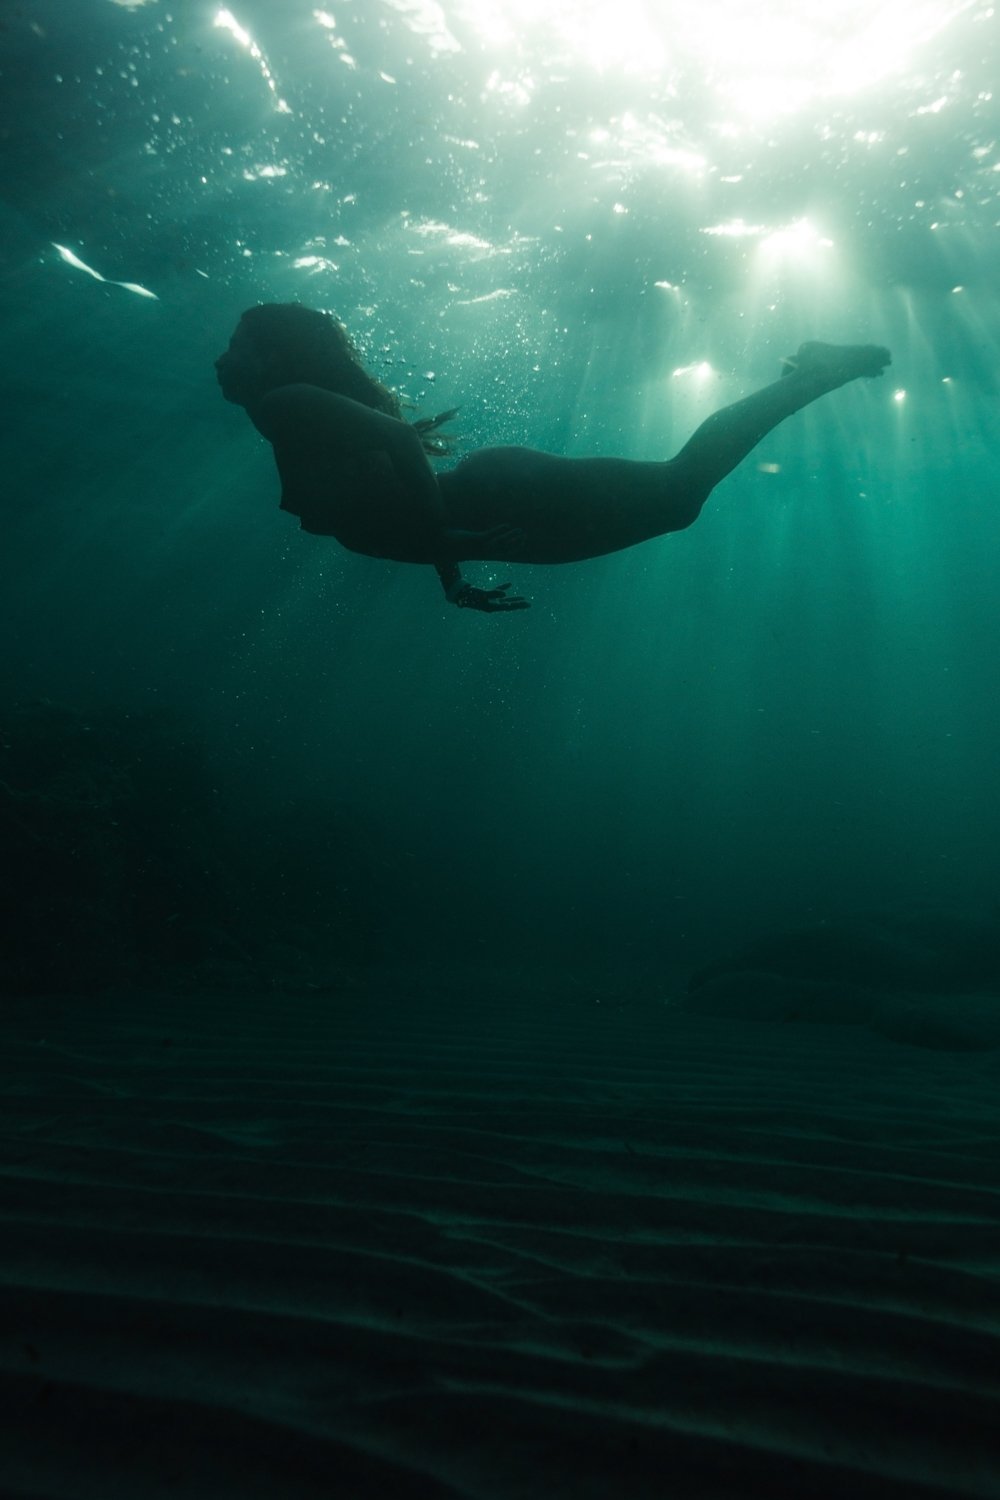 siren sirens corse corsica underwater photography photographe sous leau mermaid femme woman women nude nue fine art photography Krista Espino ajaccio sea Mediterranean france travel-15.jpg